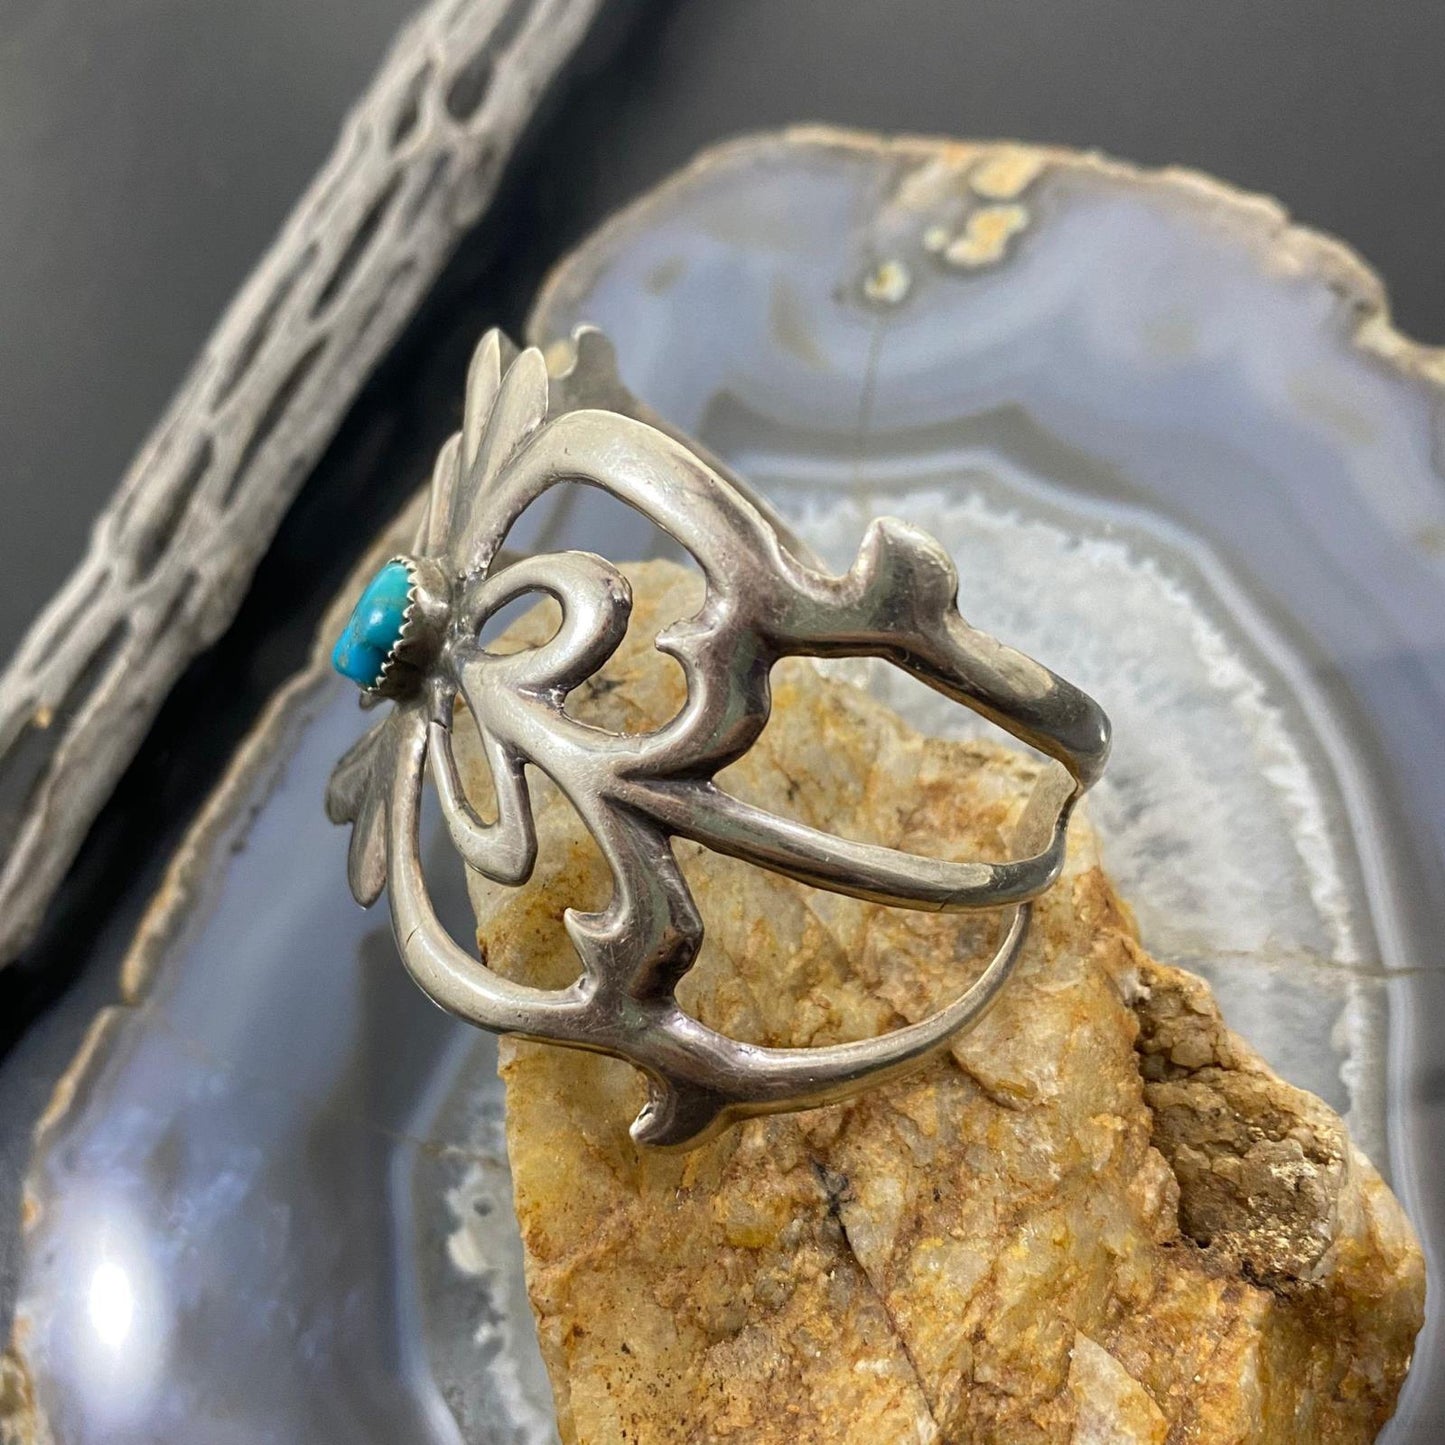 Vintage Native American Sterling Silver Turquoise Sand Cast Bracelet For Women